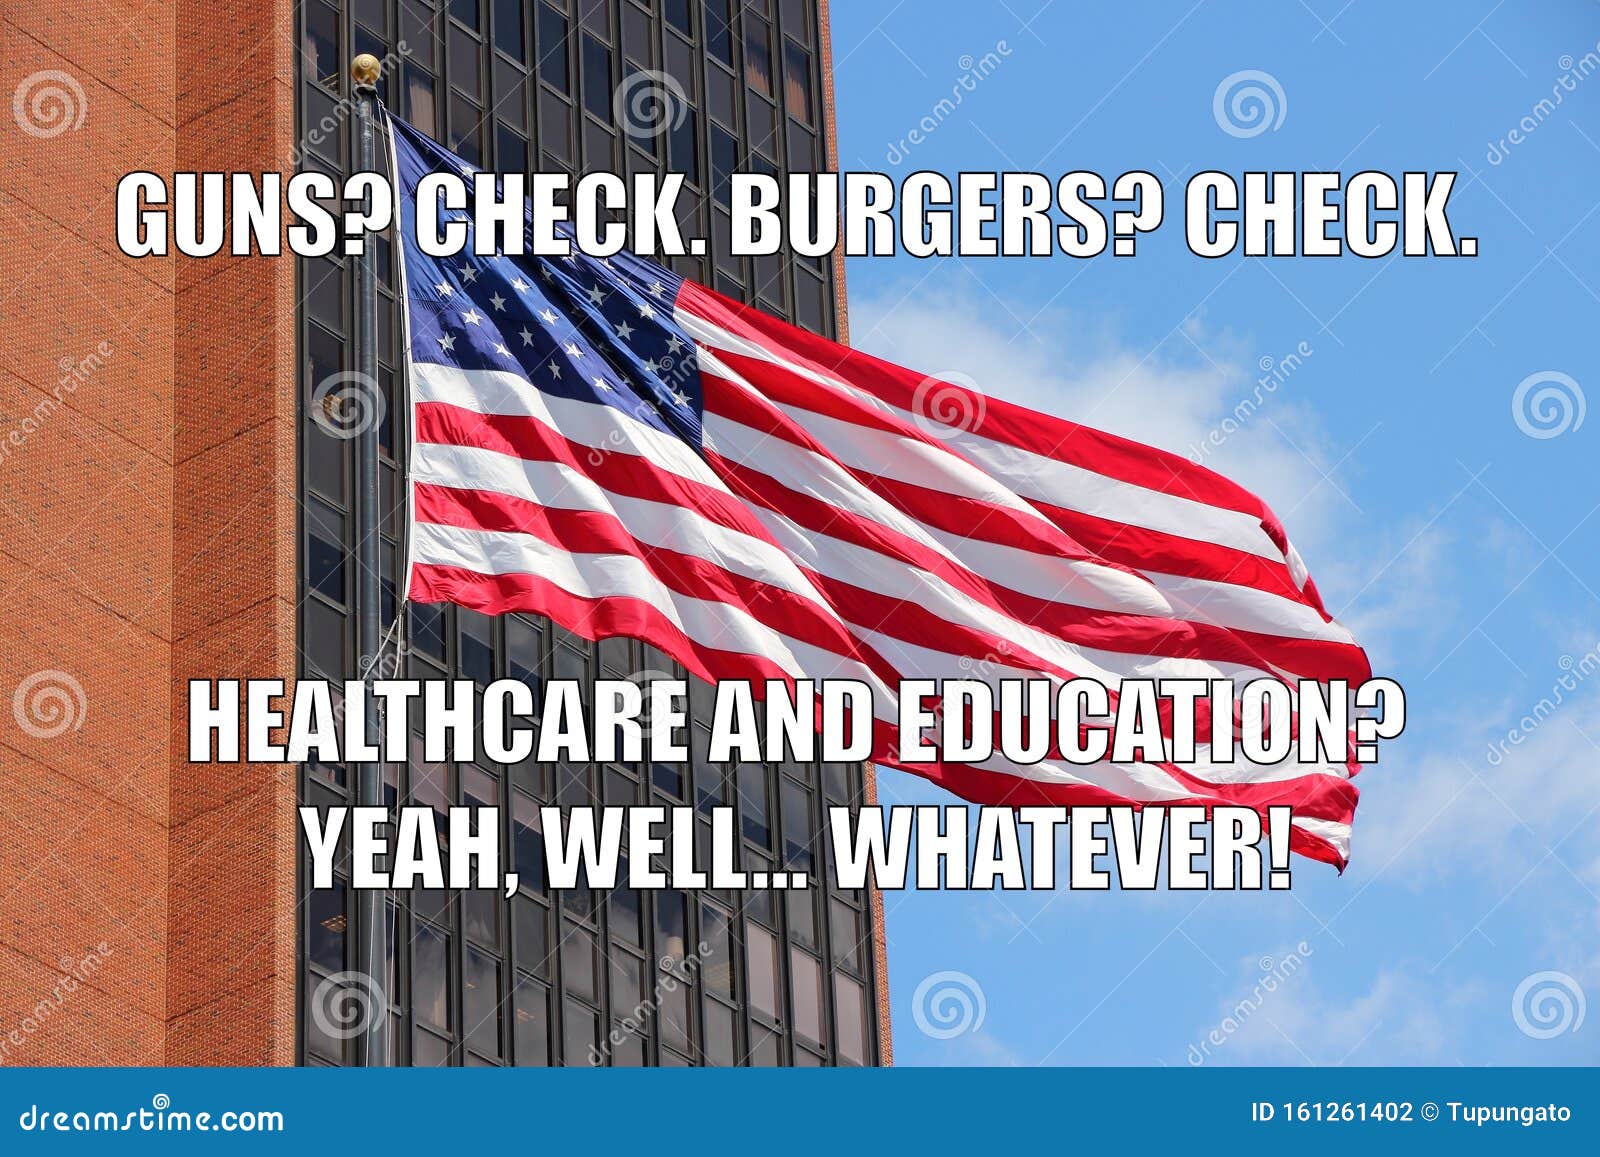 America problems meme stock photo. Image of problems - 161261402